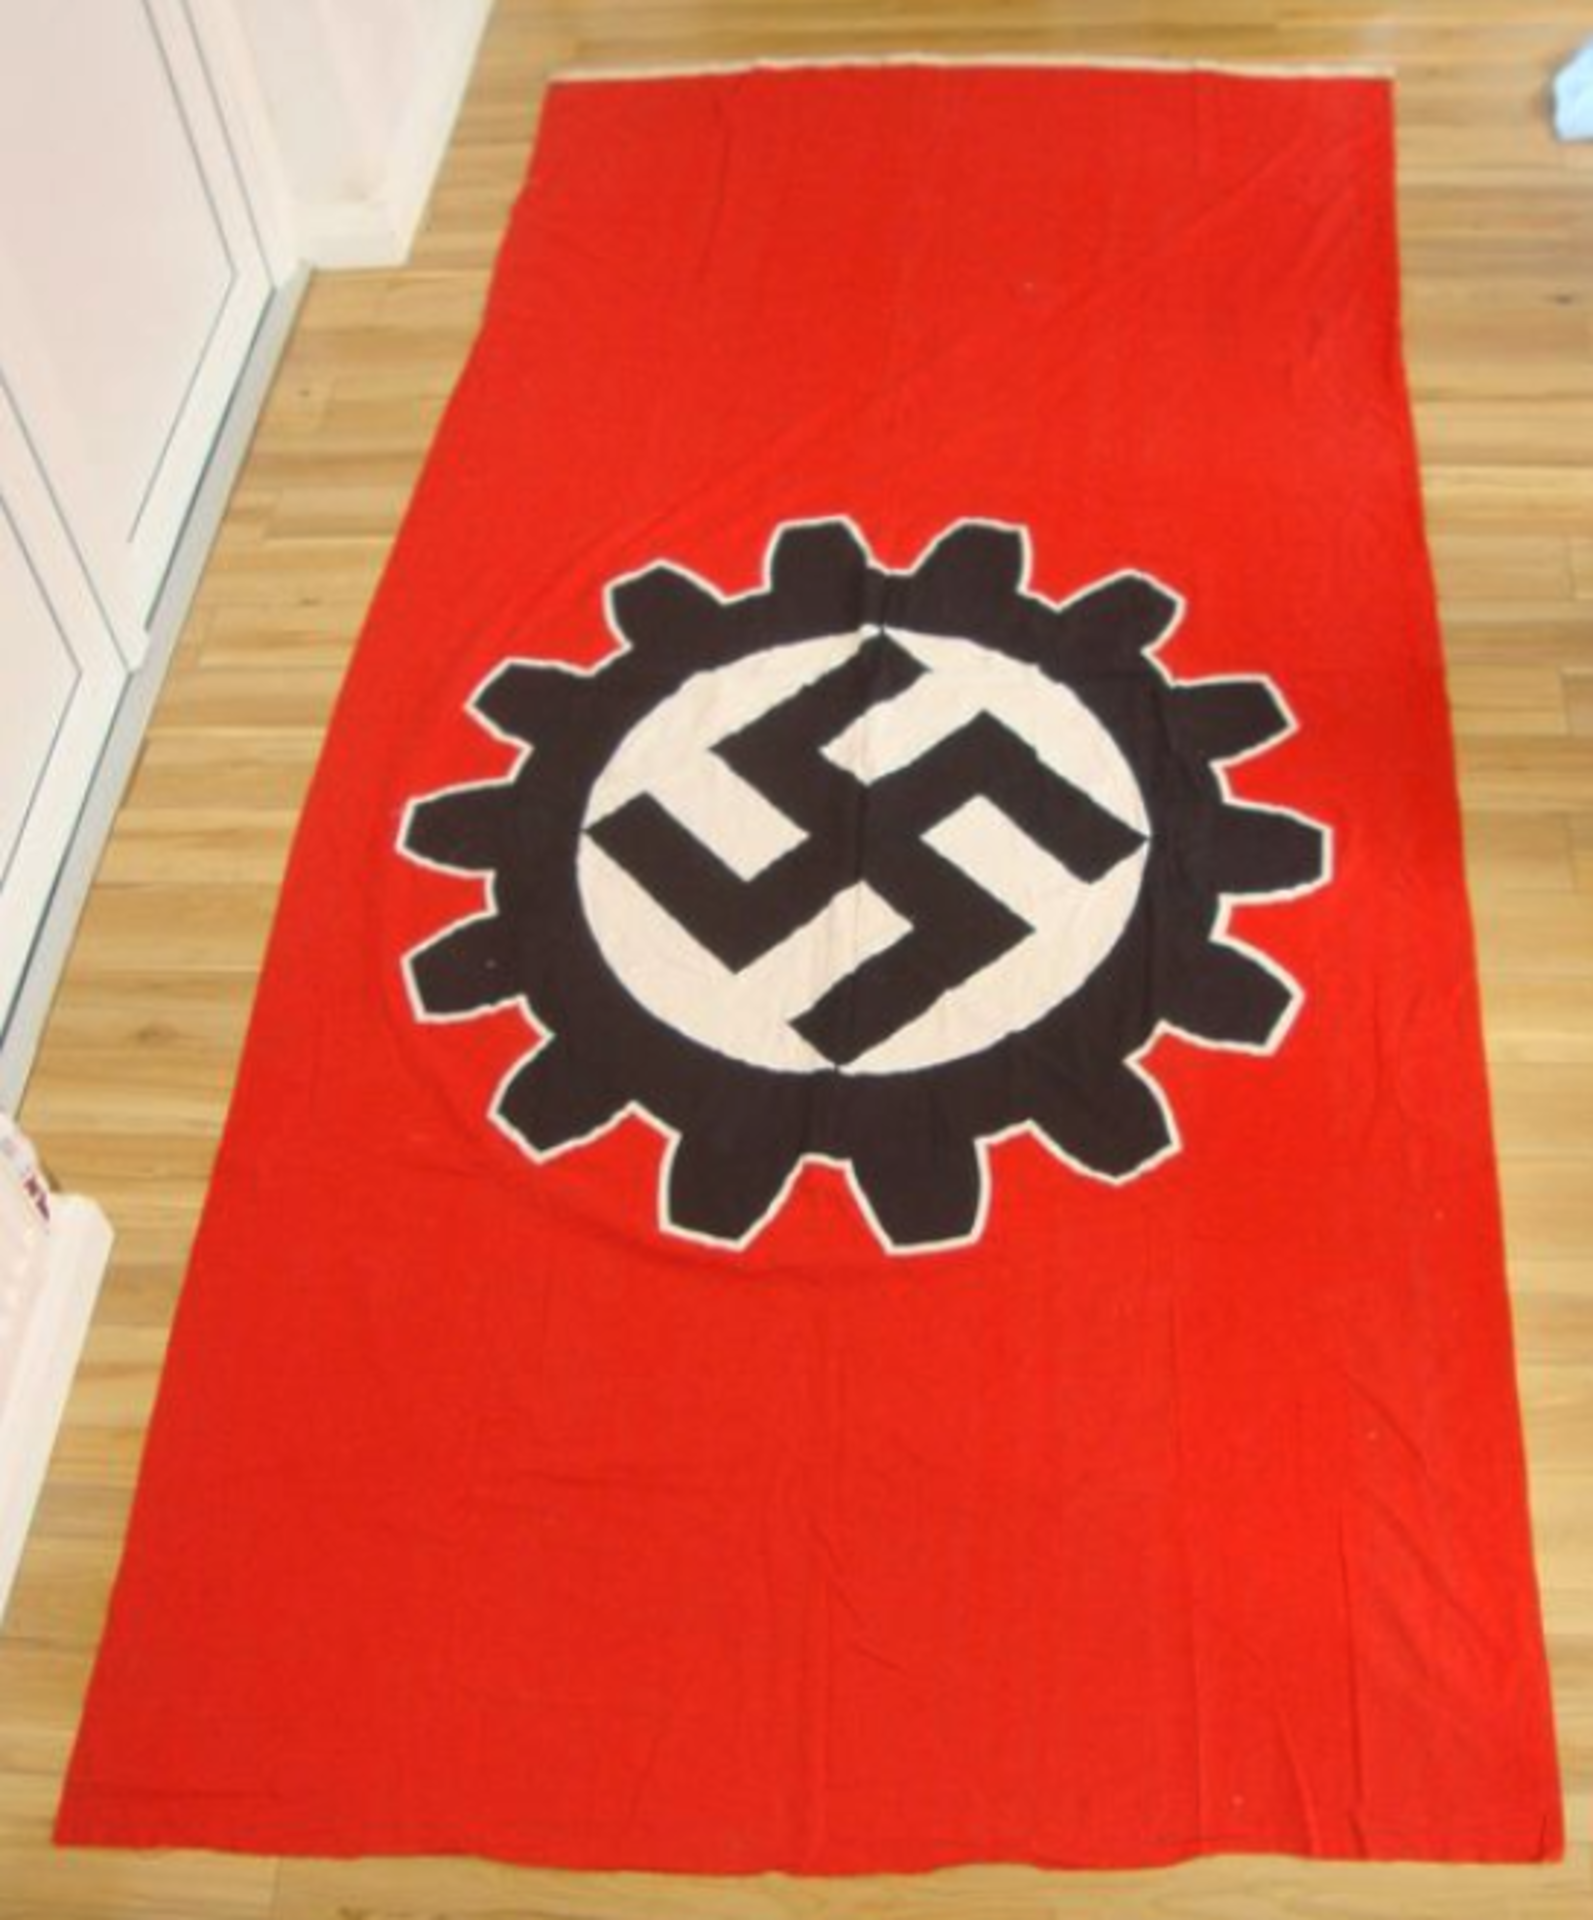 MASSIVE ORIGINAL, Nazi German Third Reich D.A.F (German Labour Front) Banner / Flag - Image 3 of 3